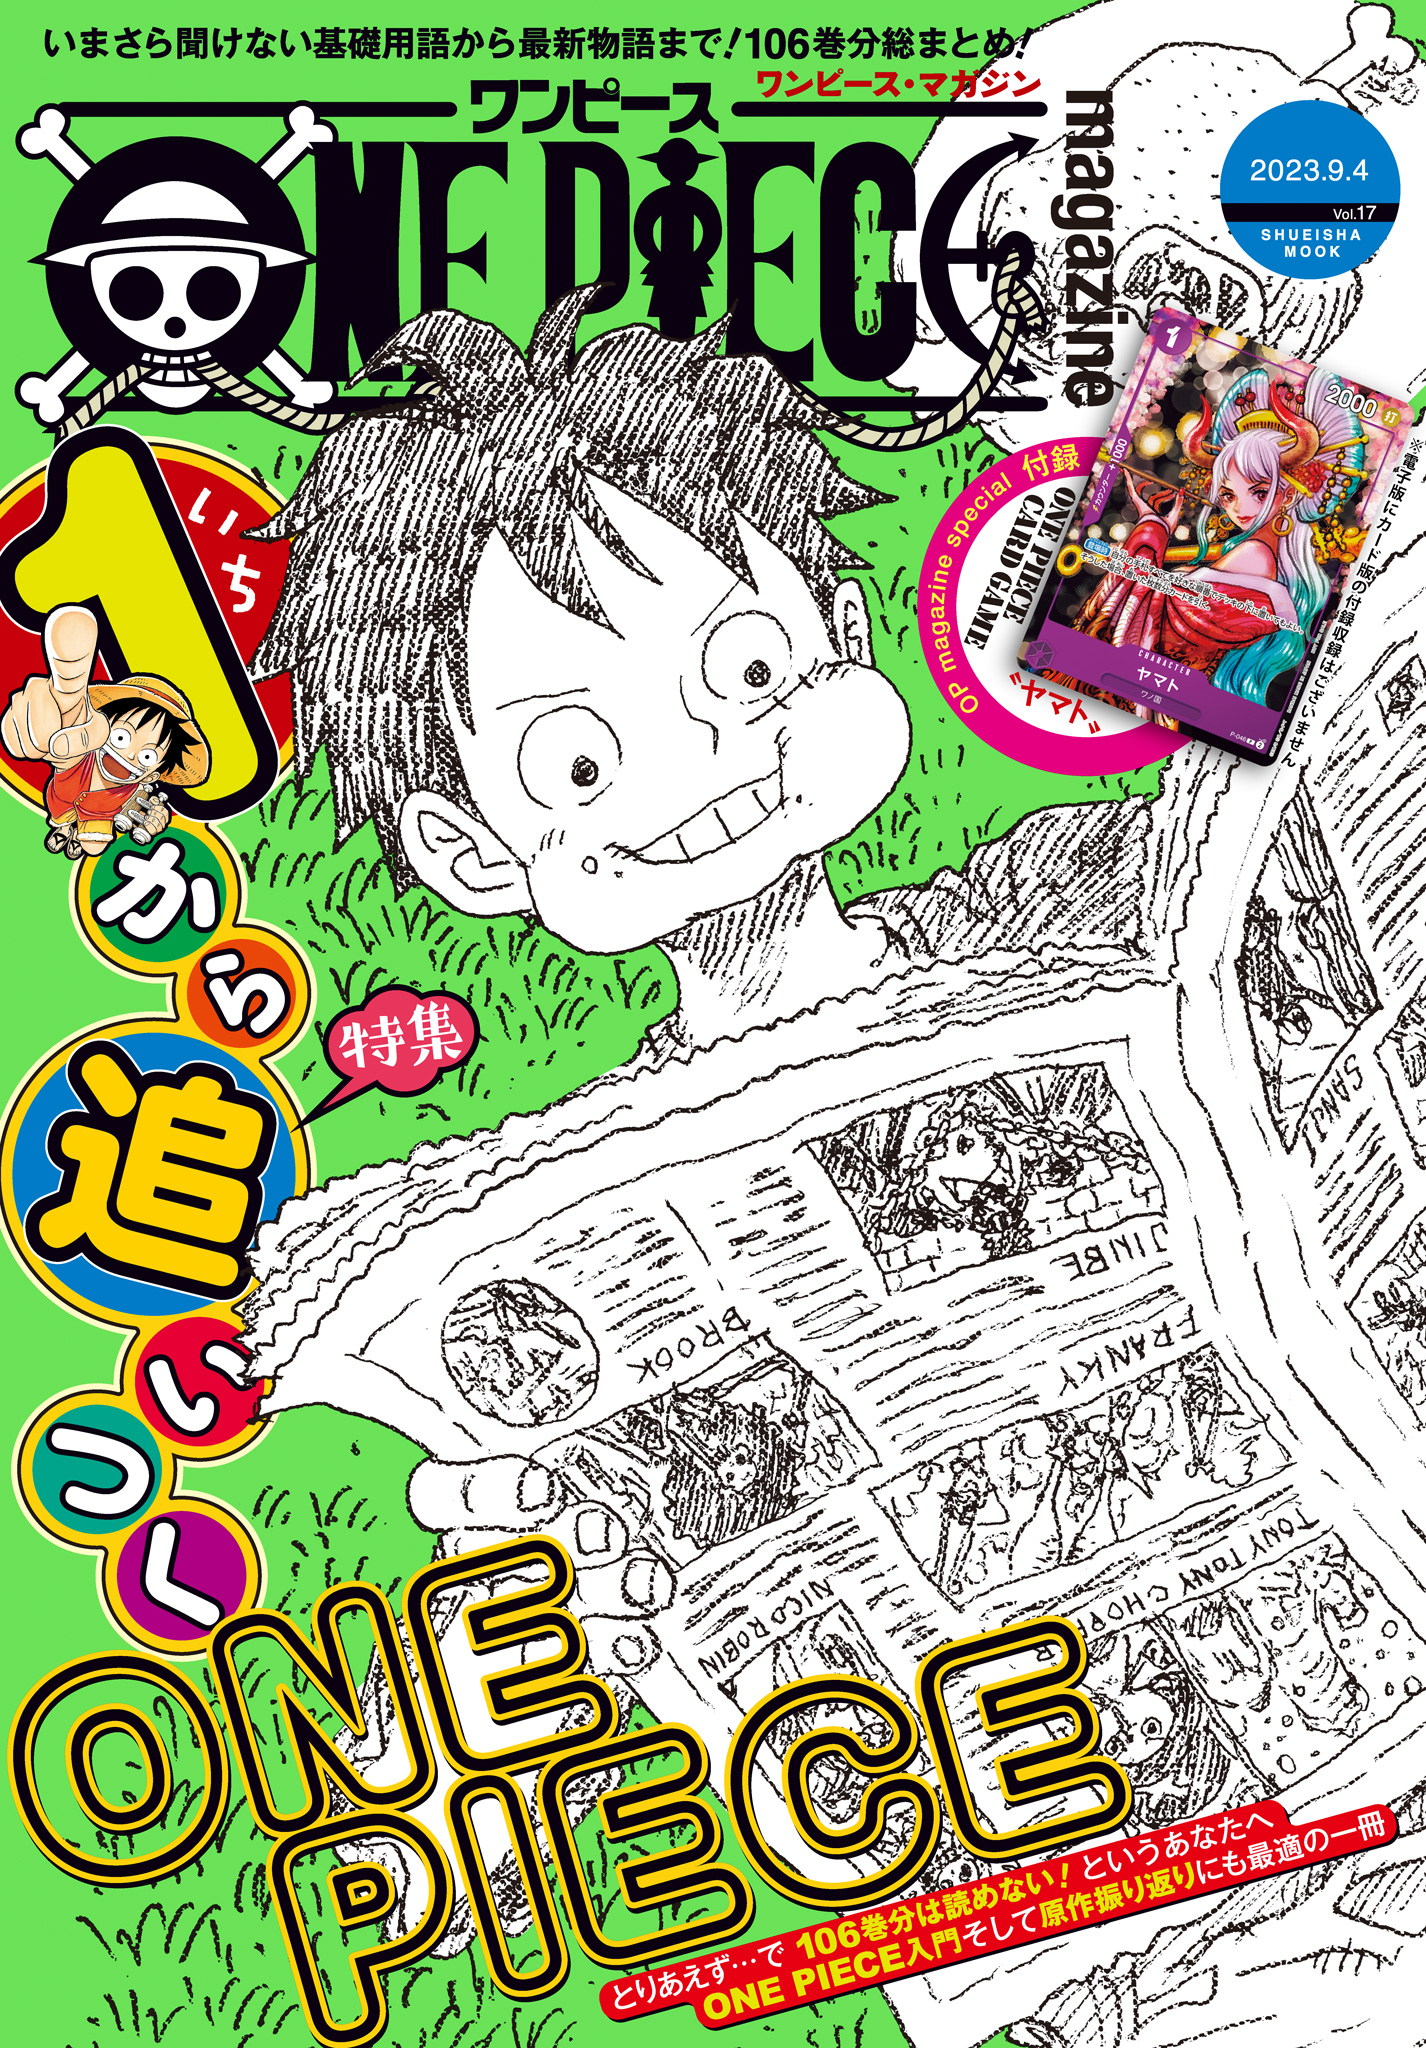 ONE PIECE magazine Vol.17(マンガ) - 電子書籍 | U-NEXT 初回600円分無料